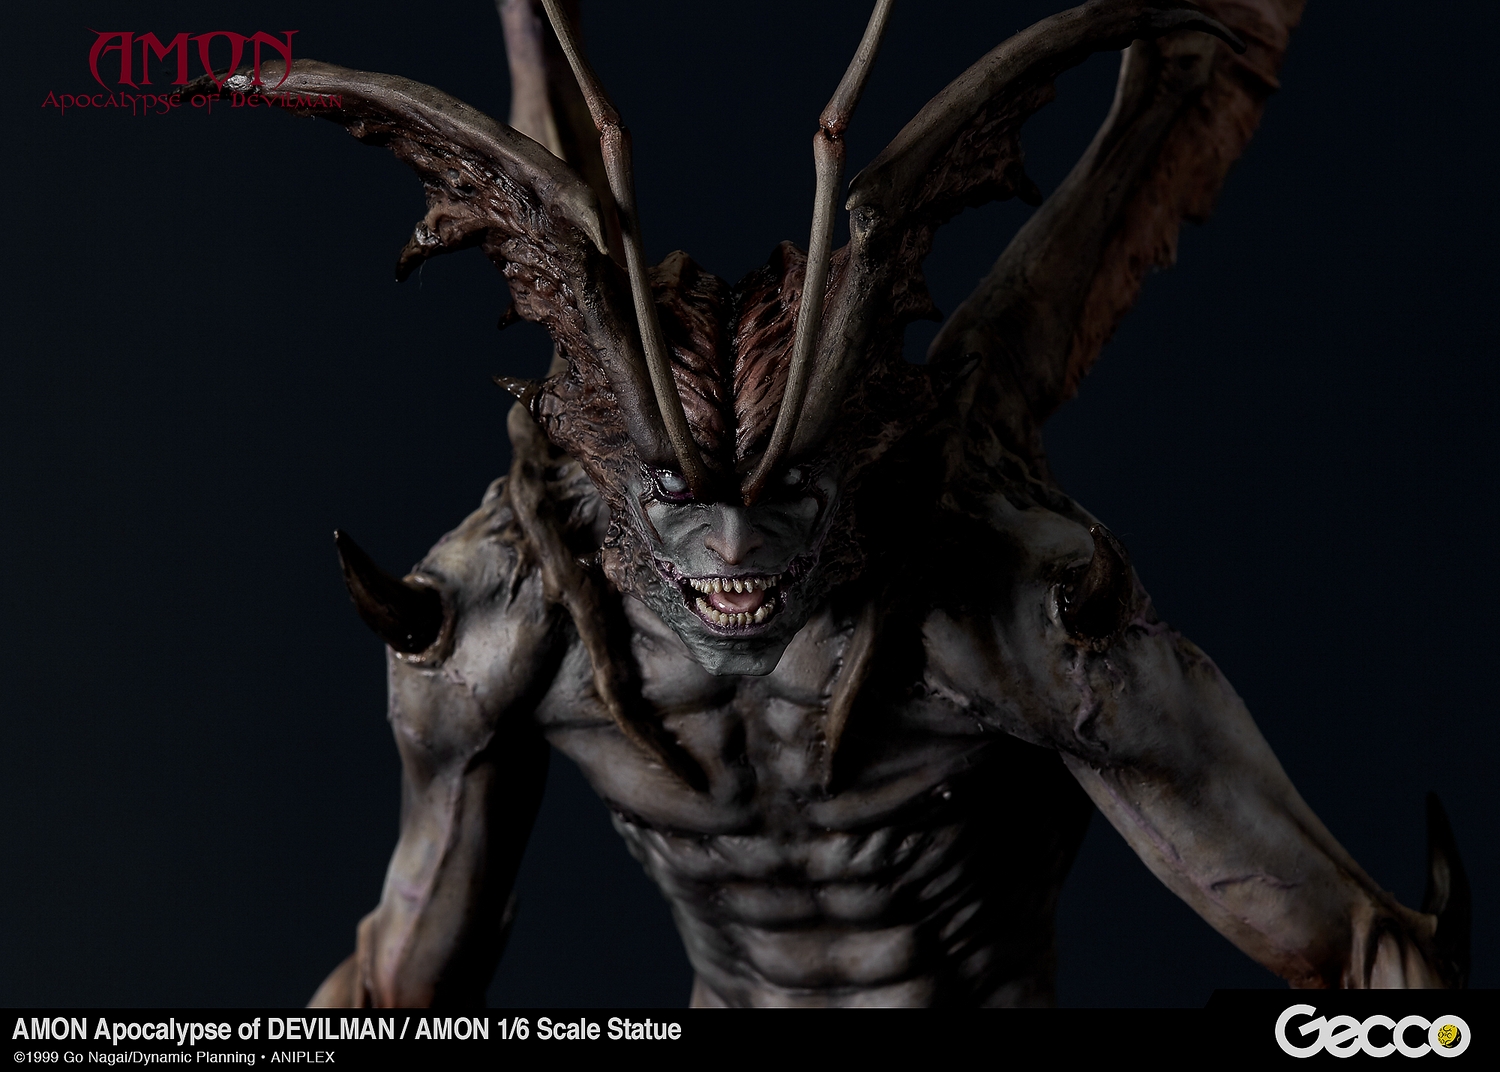 Gecco-Amon-Apocalypse-of-Devilman-Statue-015.jpg